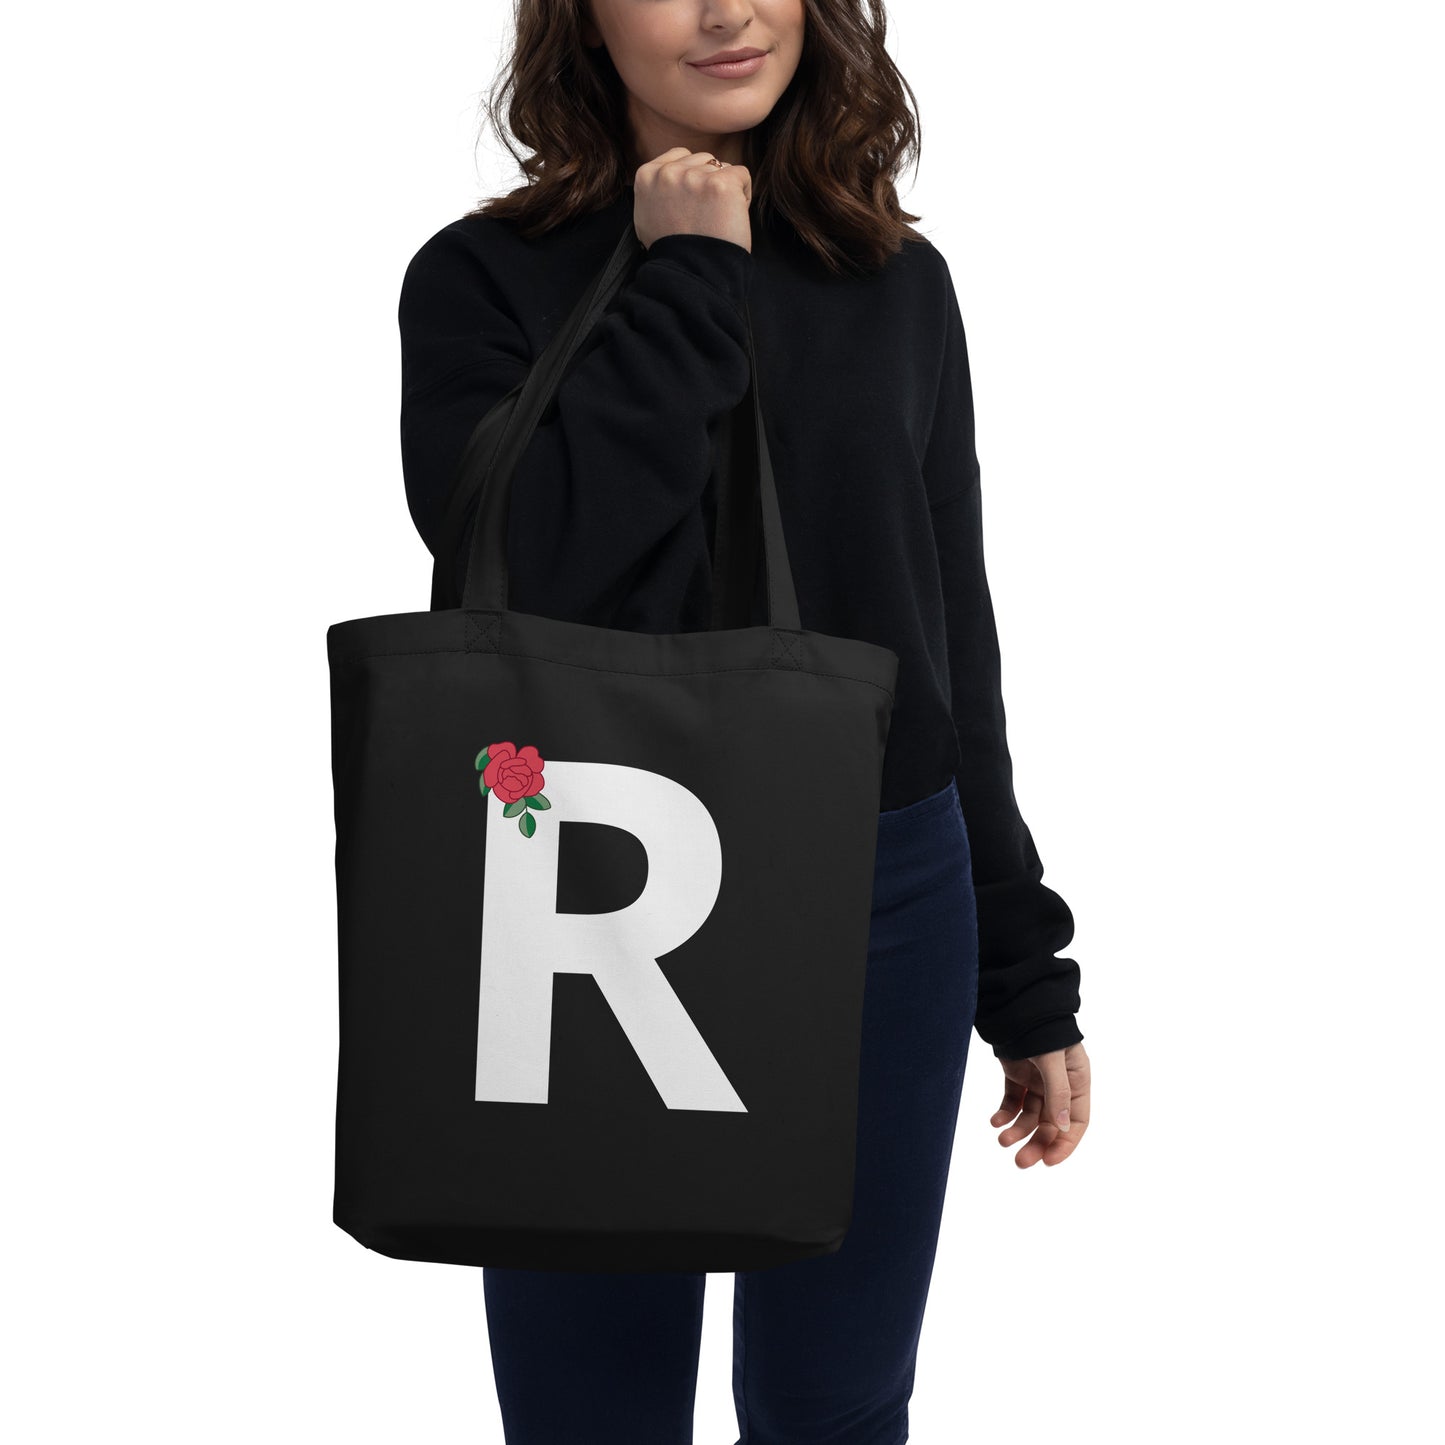 Letter "R" Eco Tote Bag